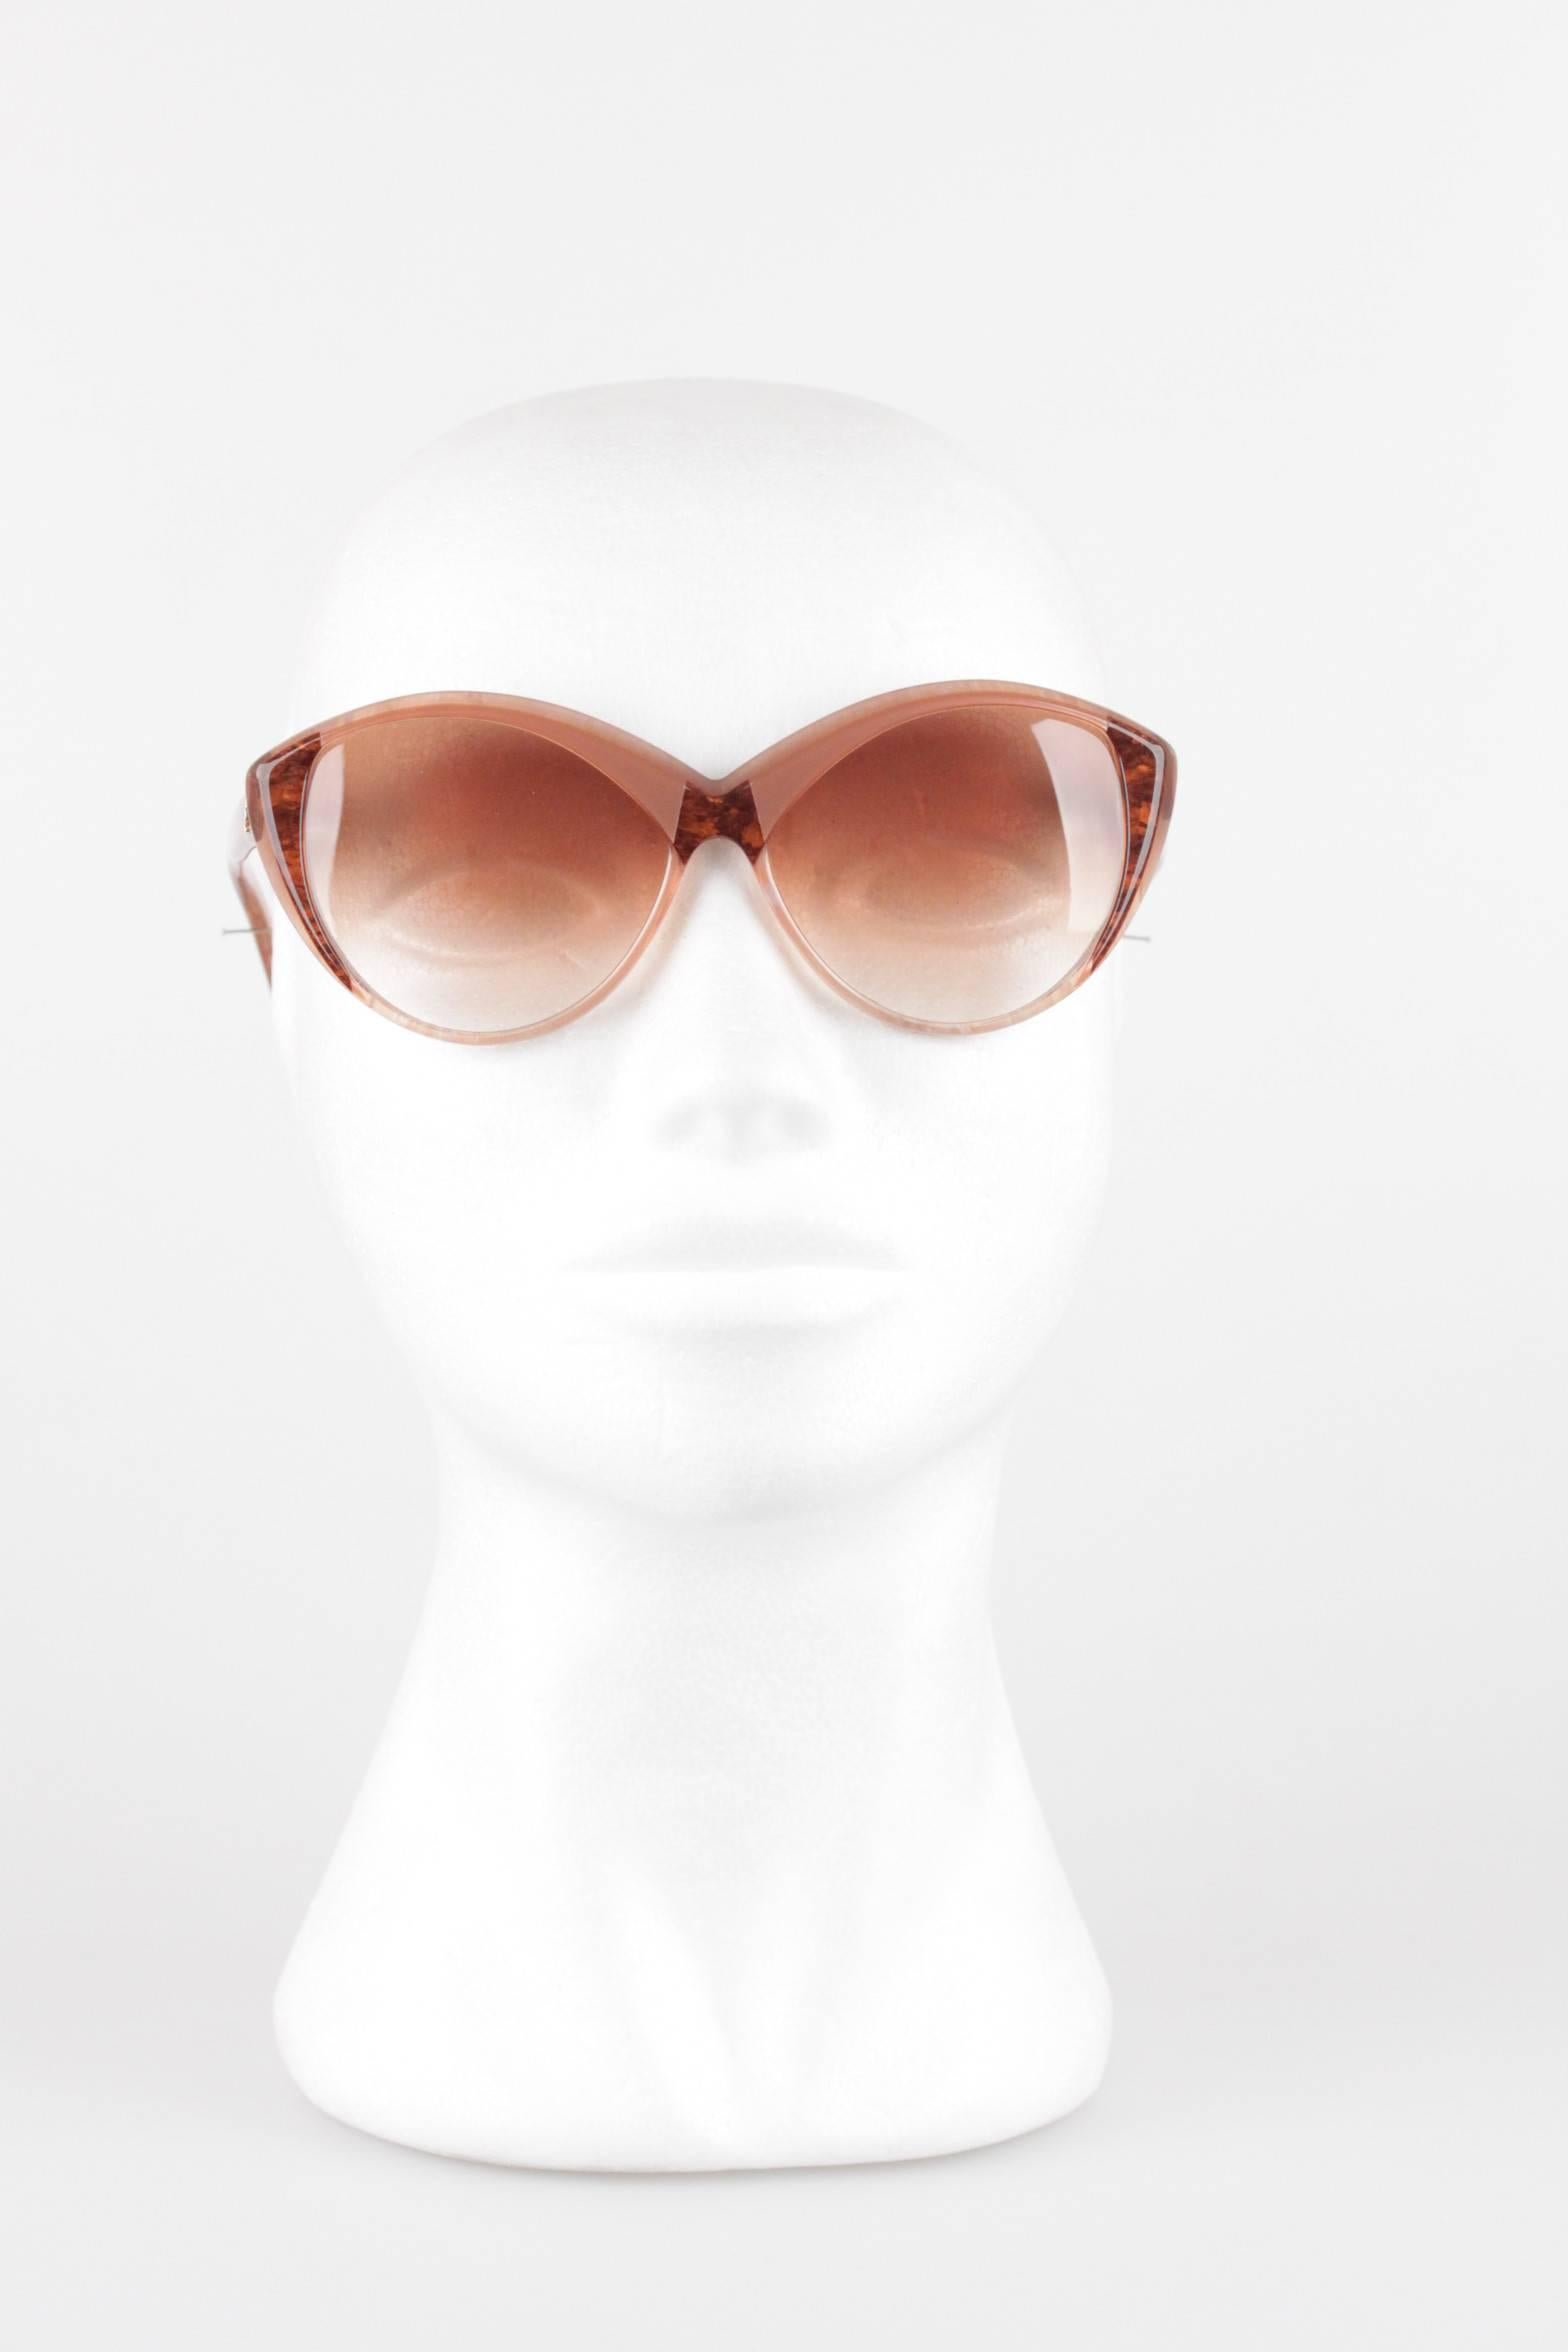 YVES SAINT LAURENT Vintage MINT Cat-Eye Pink MARBLED Sunglasses 8702 P74 4